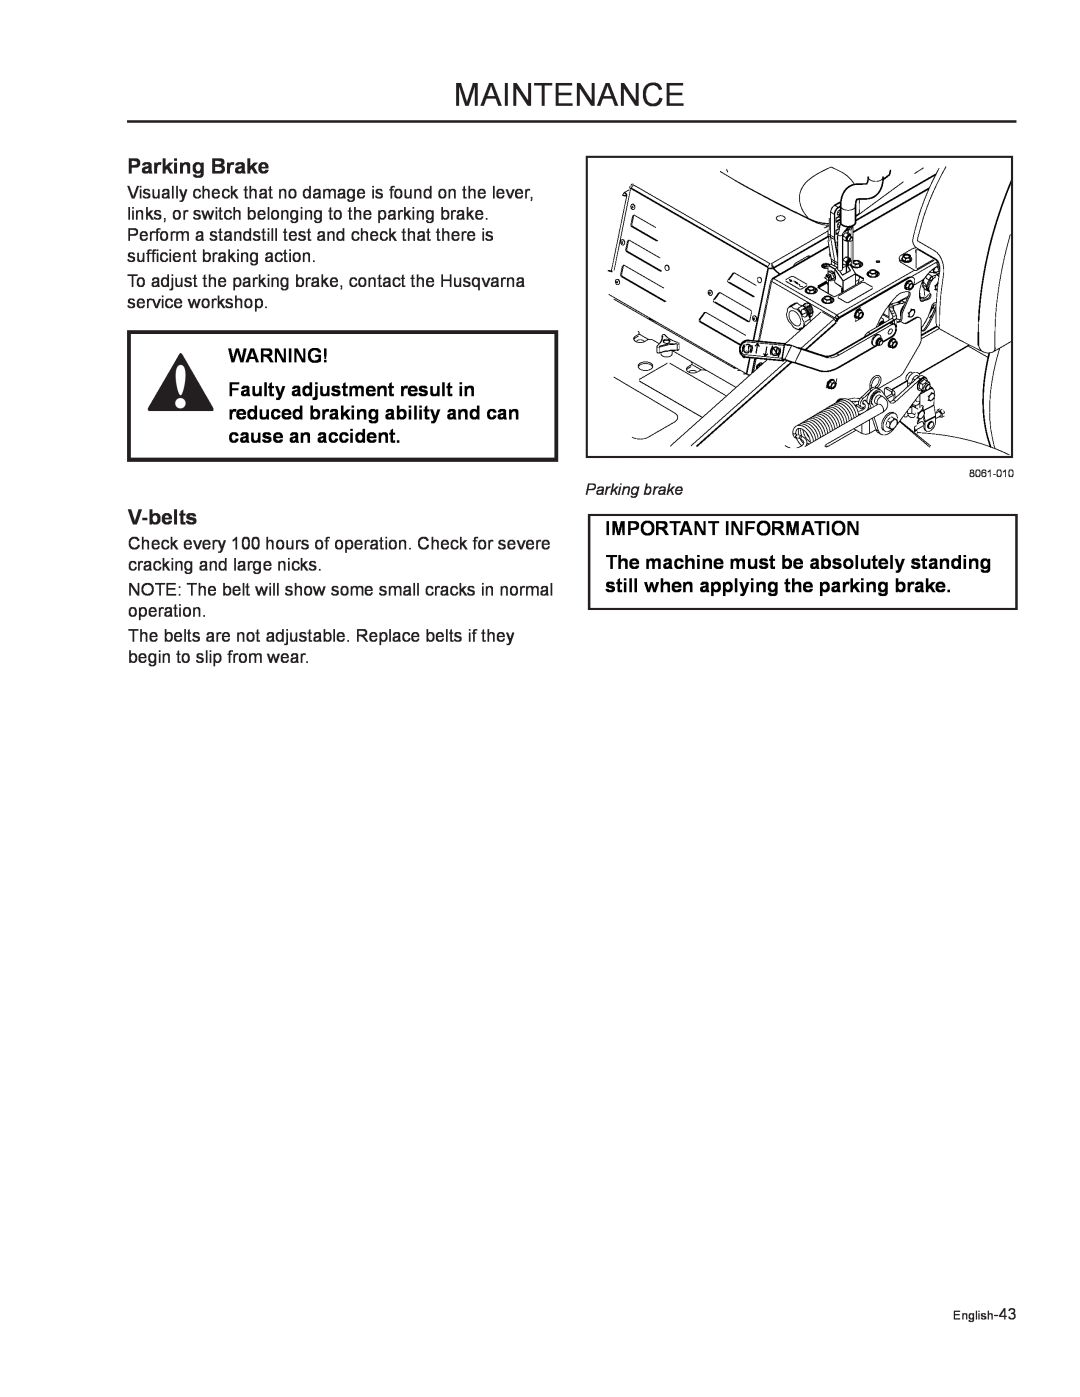 Husqvarna MZ5225 / 968999717, MZ6125C / 968999749 manual Parking Brake, V-belts, Maintenance, Important Information 